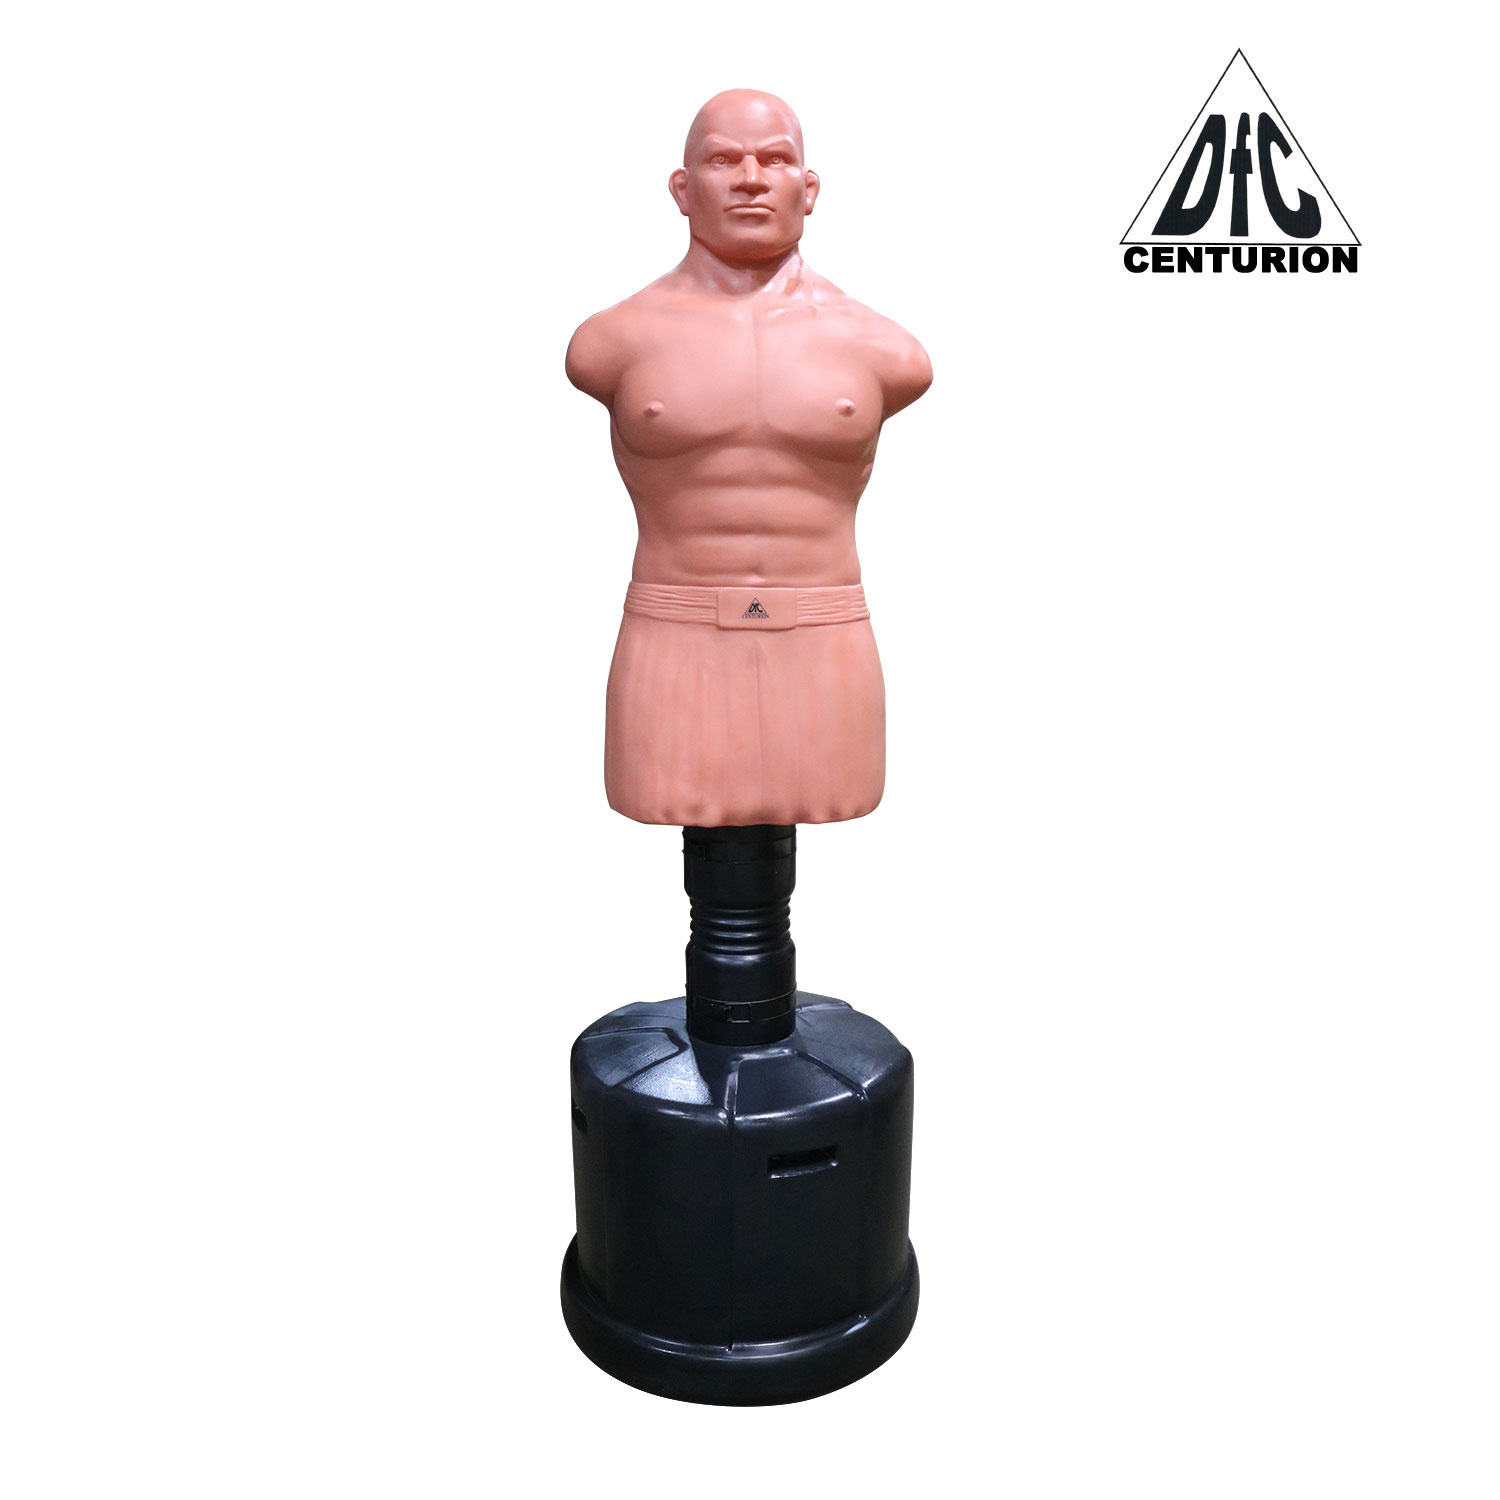 DFC Centurion Boxing Punching Man-Heavy водоналивной - бежевый из каталога манекенов для бокса в Уфе по цене 45990 ₽